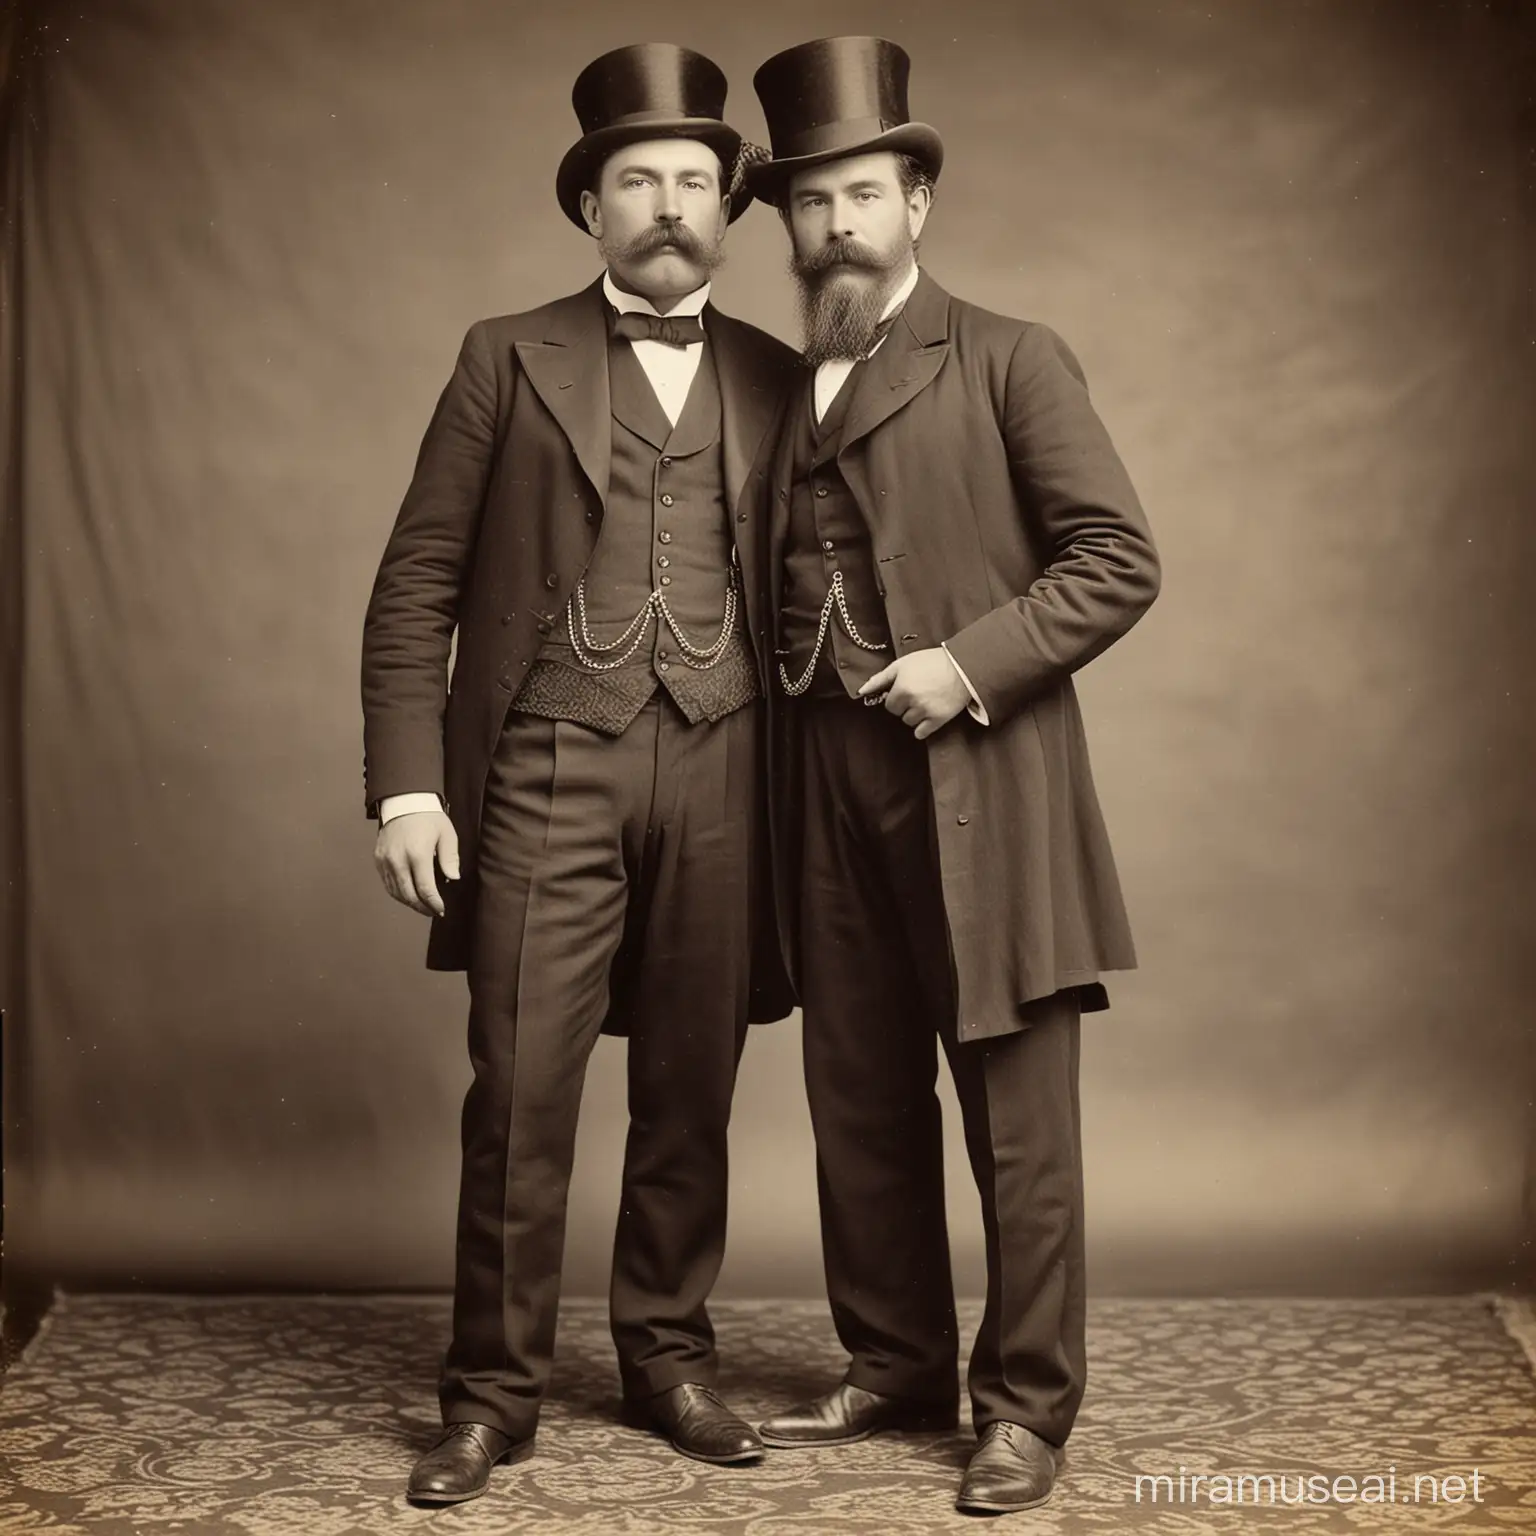 Victorian Gentlemen in Formal Attire Studio Portrait